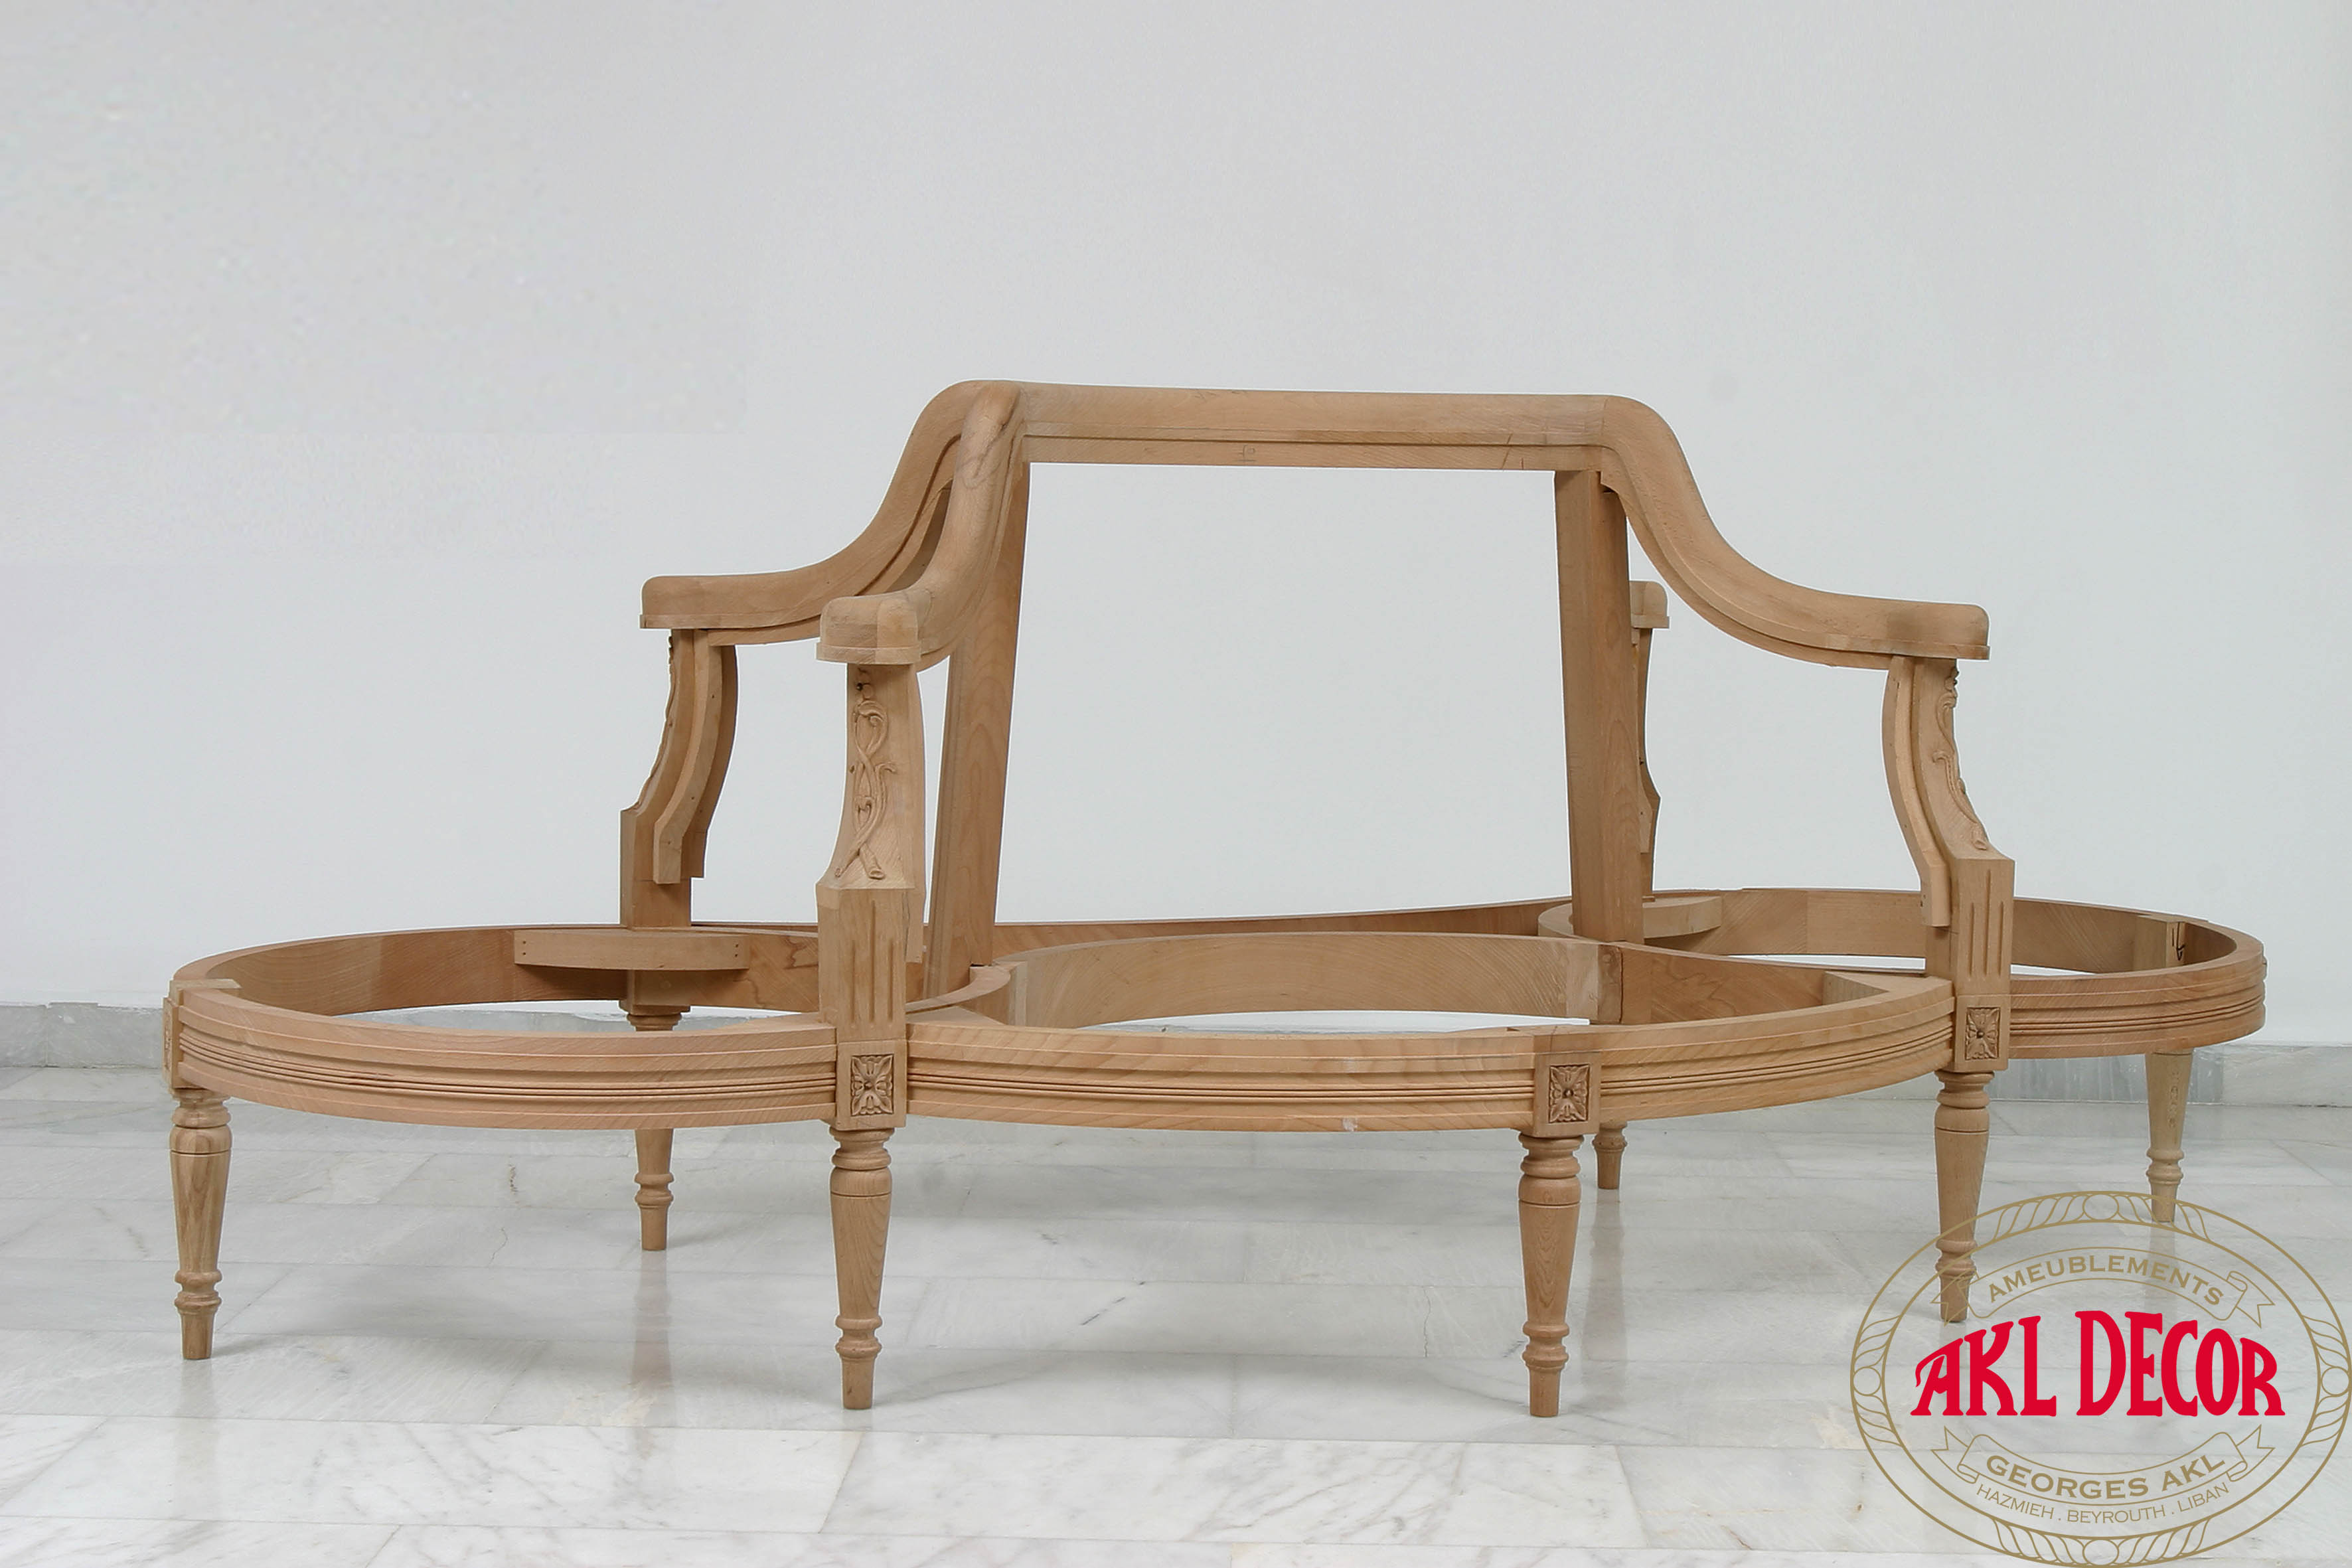 https://akldecor.com/wp-content/uploads/2018/06/furniture-production-wood-lebanon-01.jpg